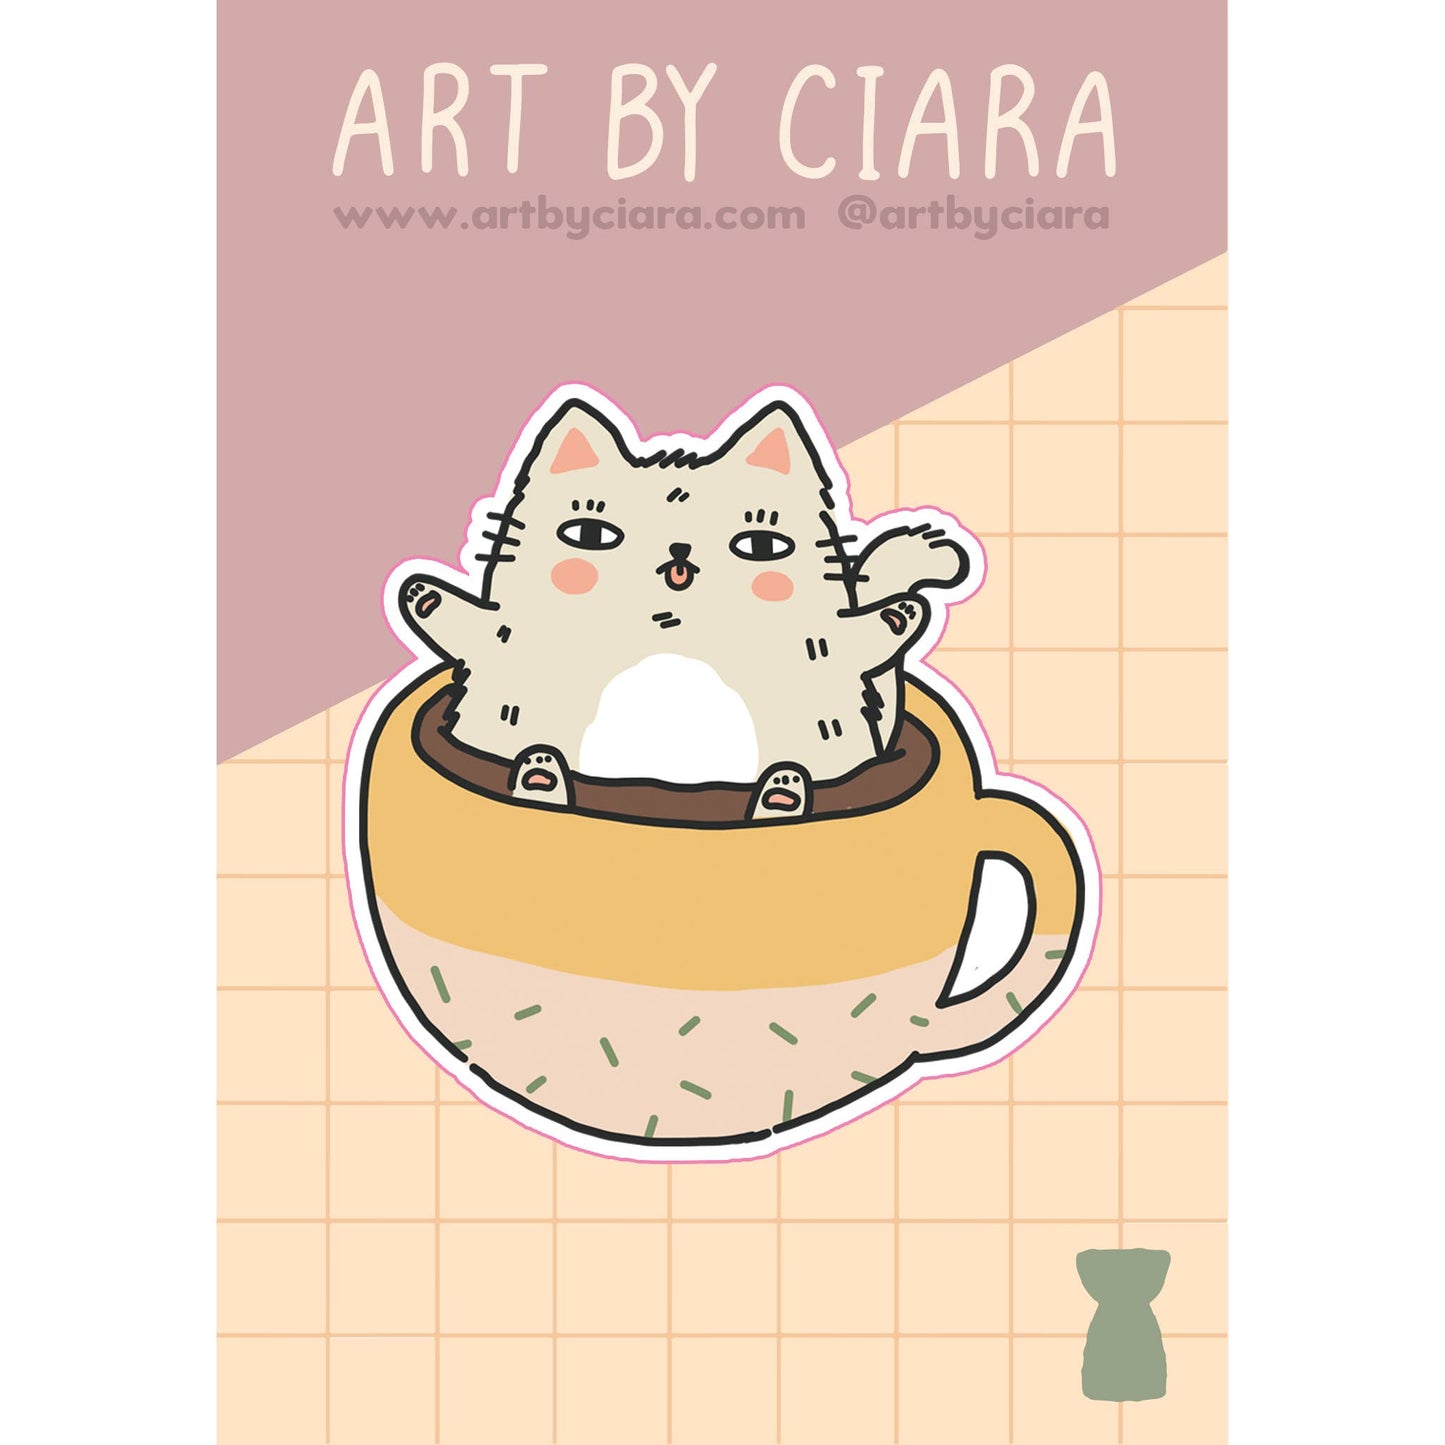 Cat in Coffee Cup Sticker